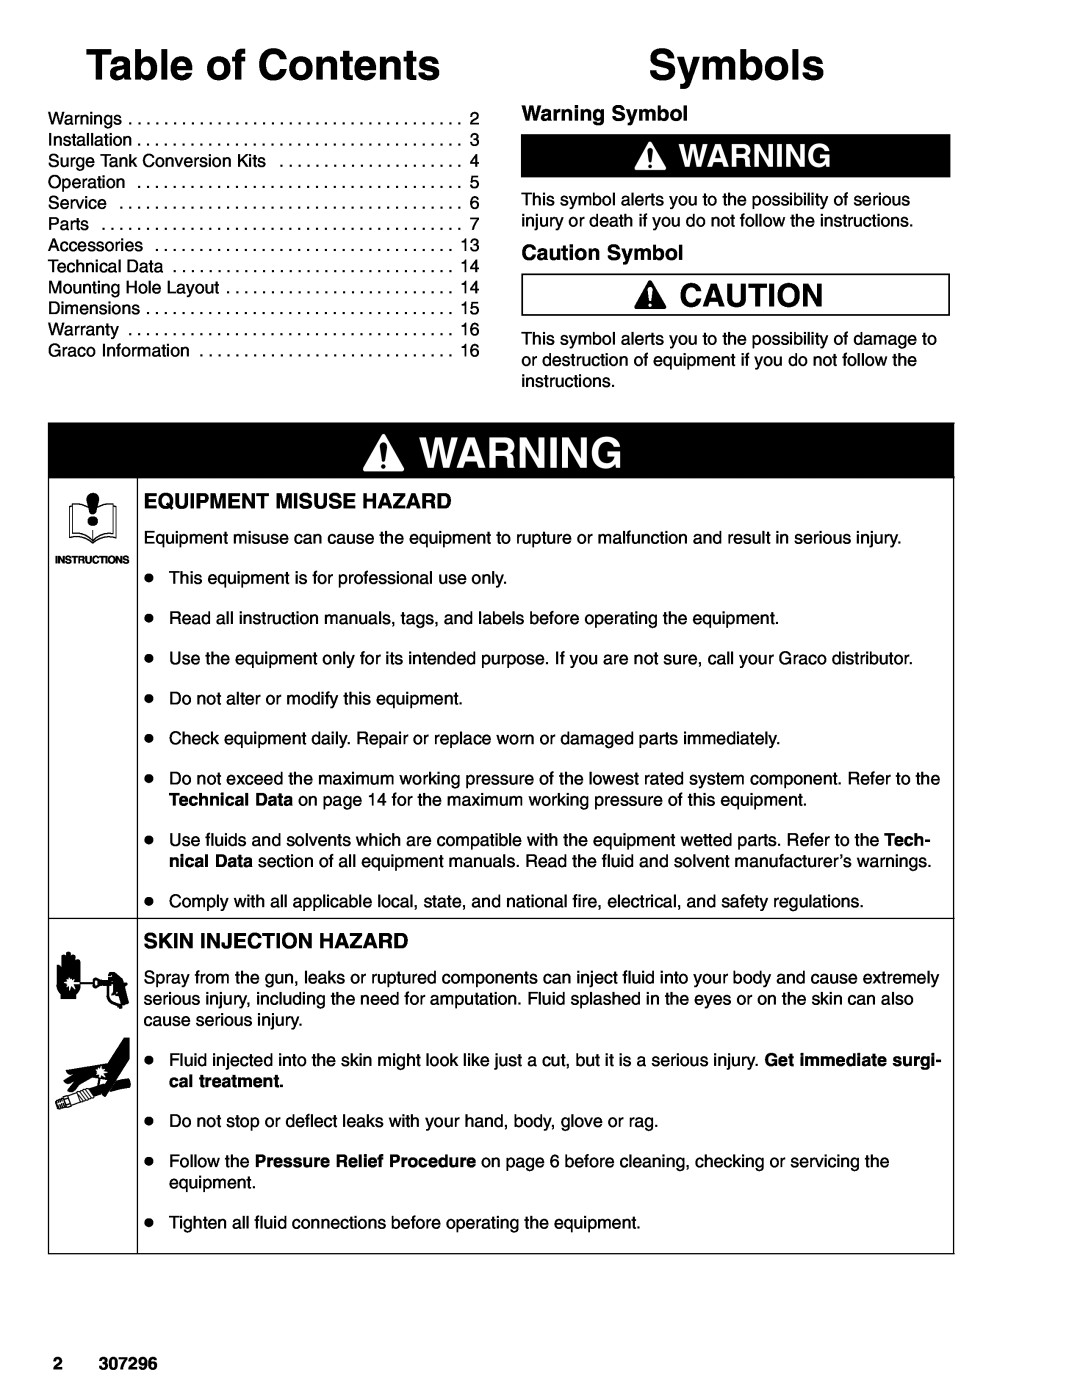 Graco Model 237069 Table of Contents, Symbols, Warning Symbol, Caution Symbol, Equipment Misuse Hazard, cal treatment 